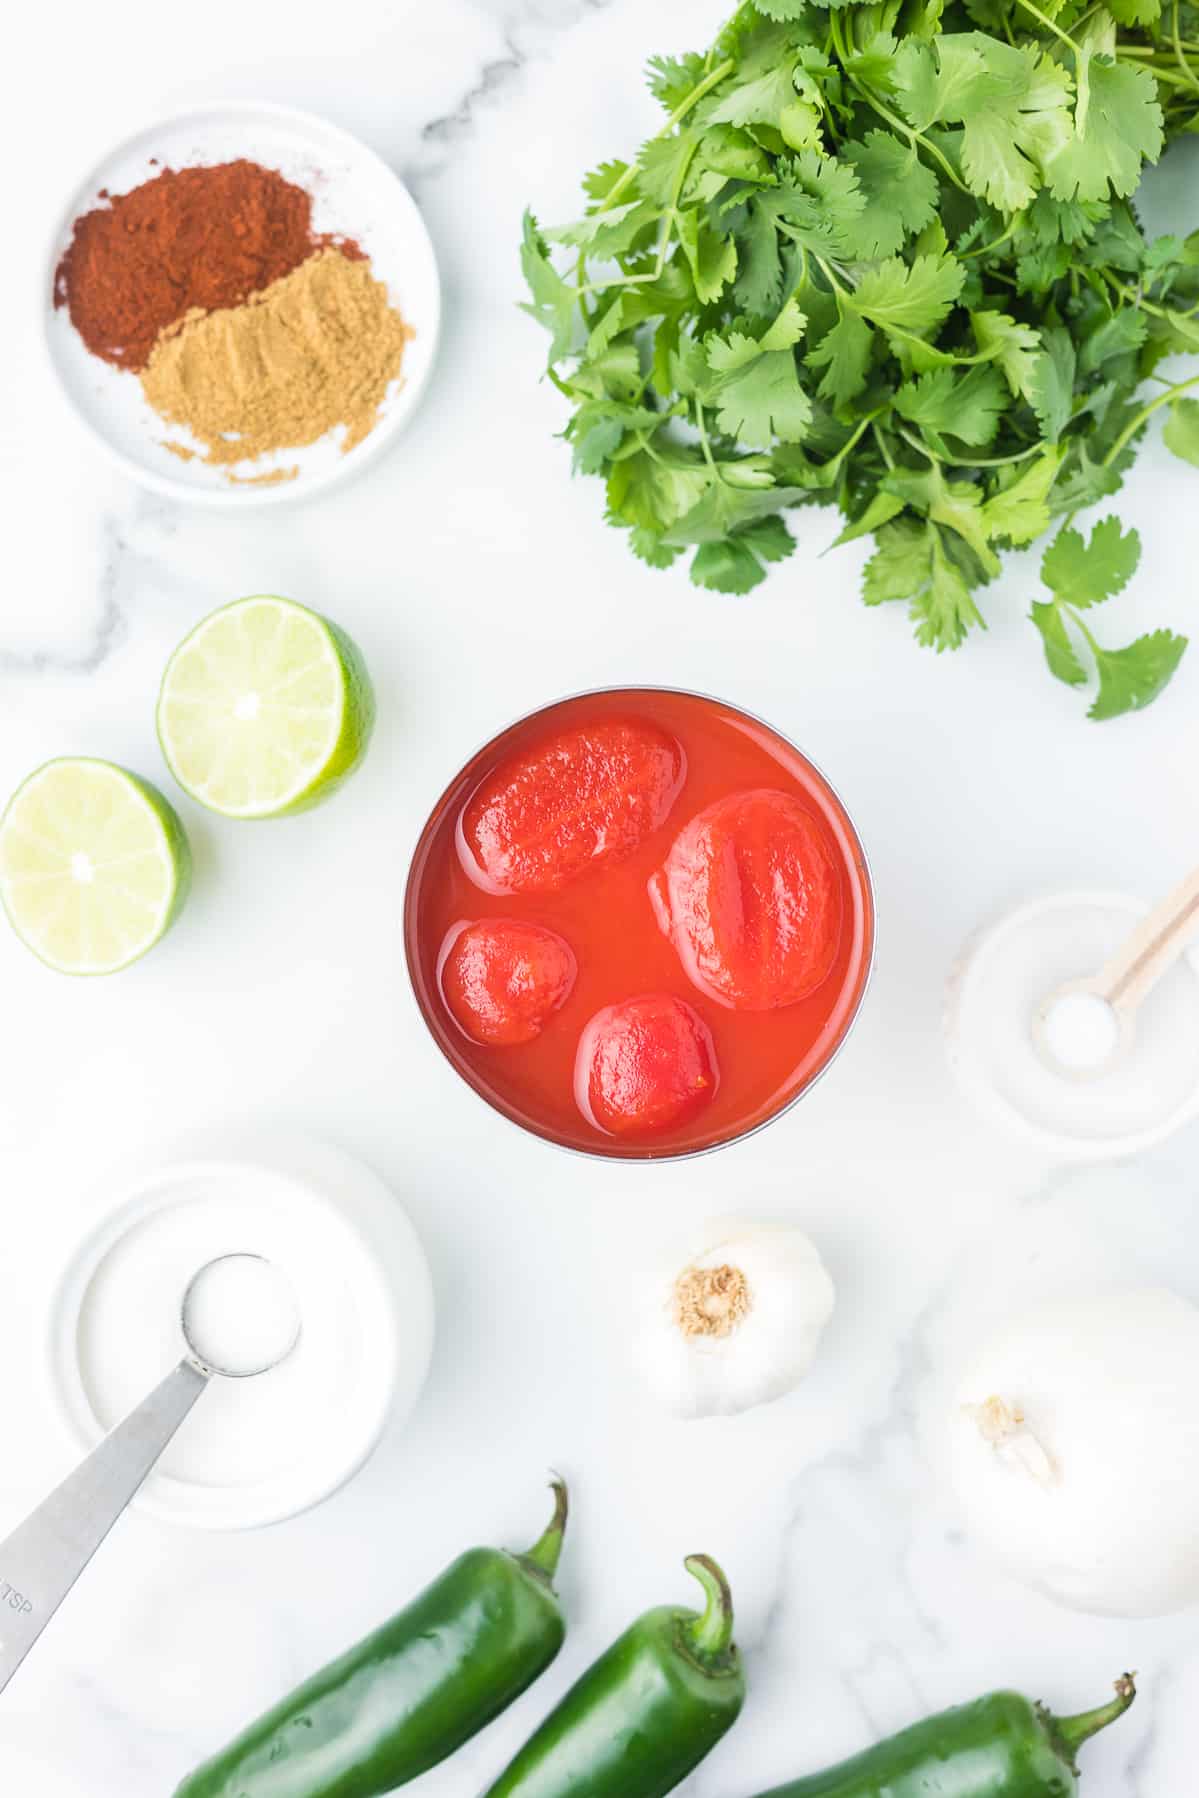 Ingredients to make tomato jalapeno salsa.